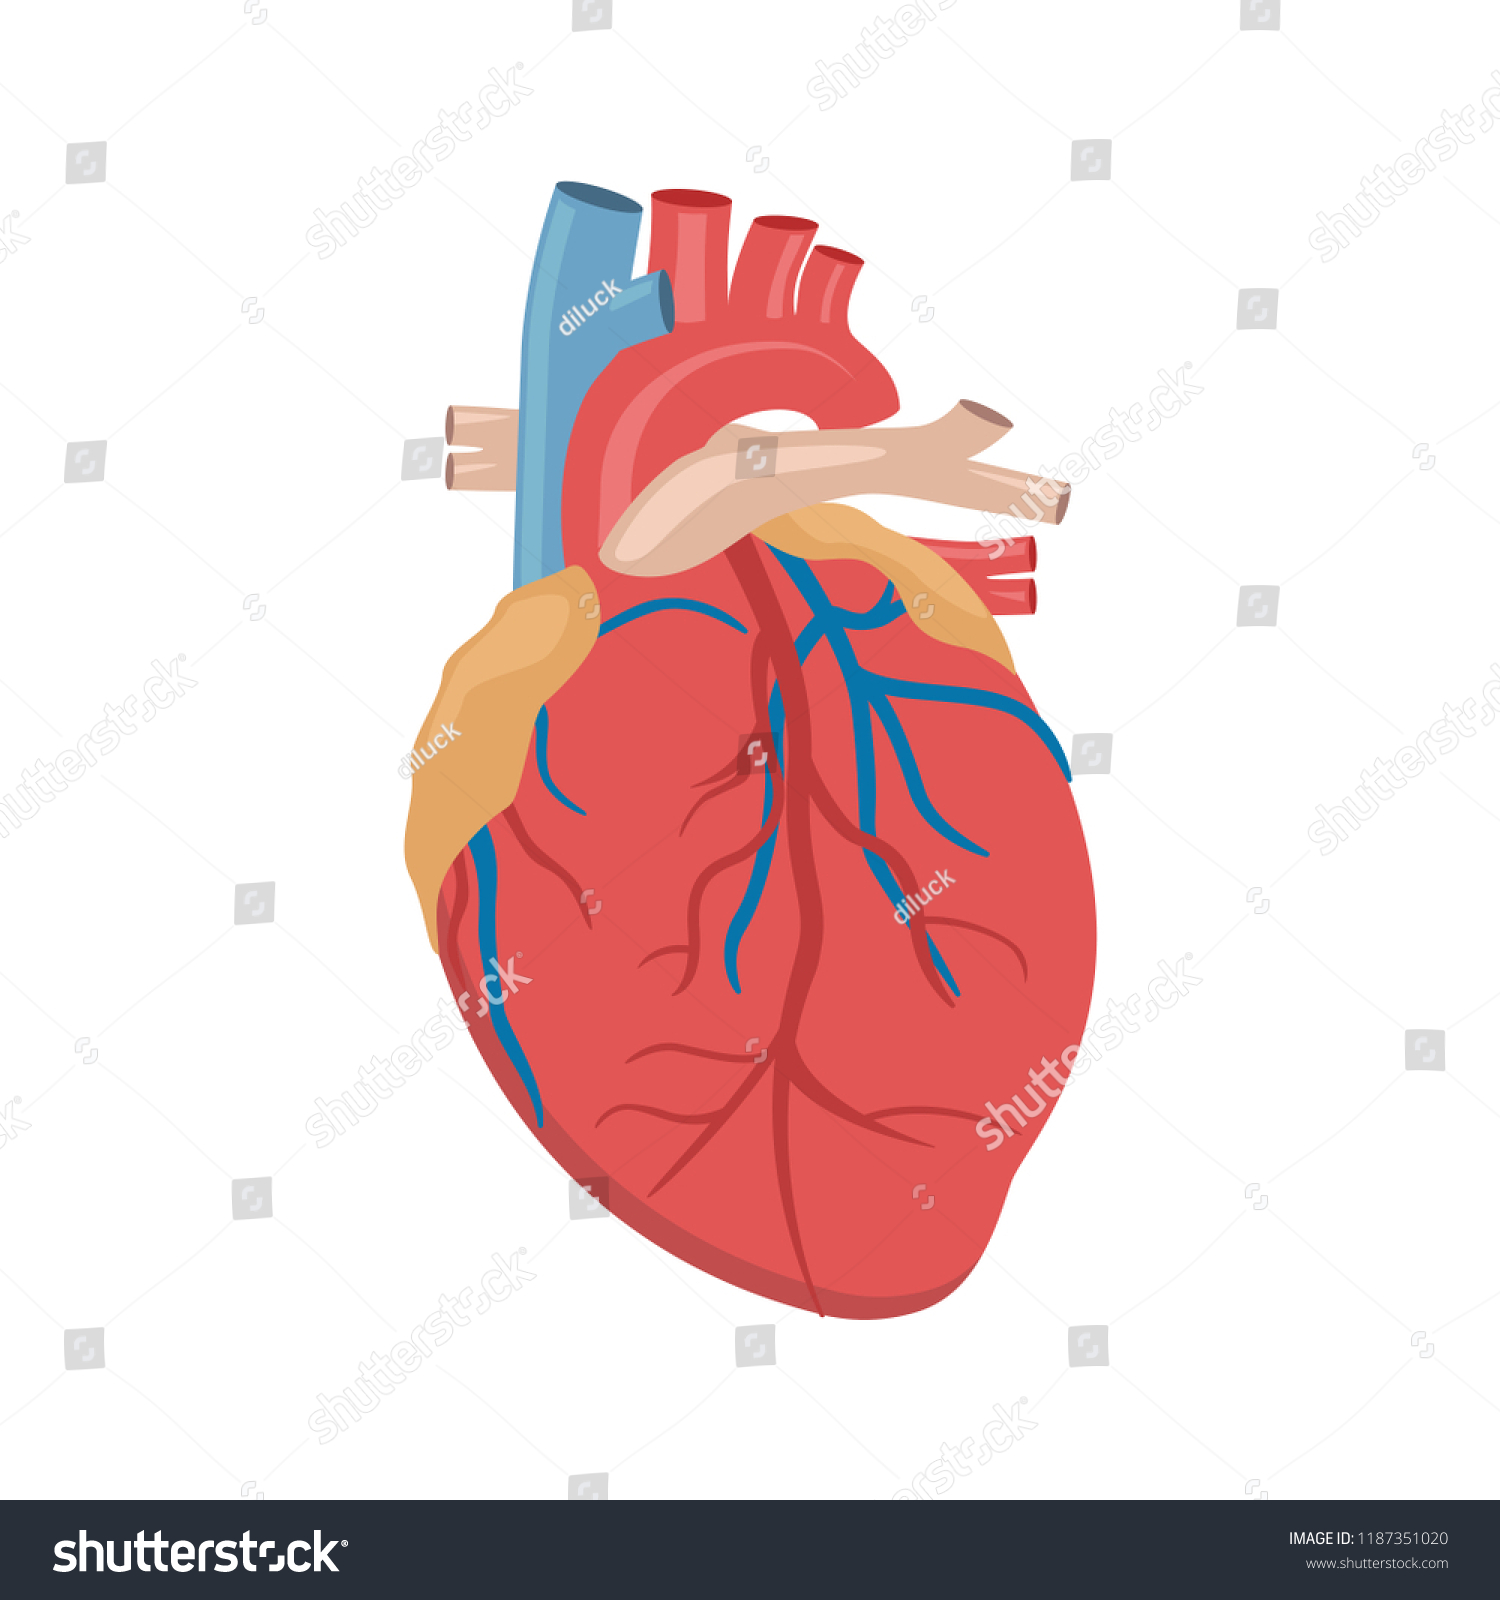 Internal Heart Anatomy Diagram | World of Reference